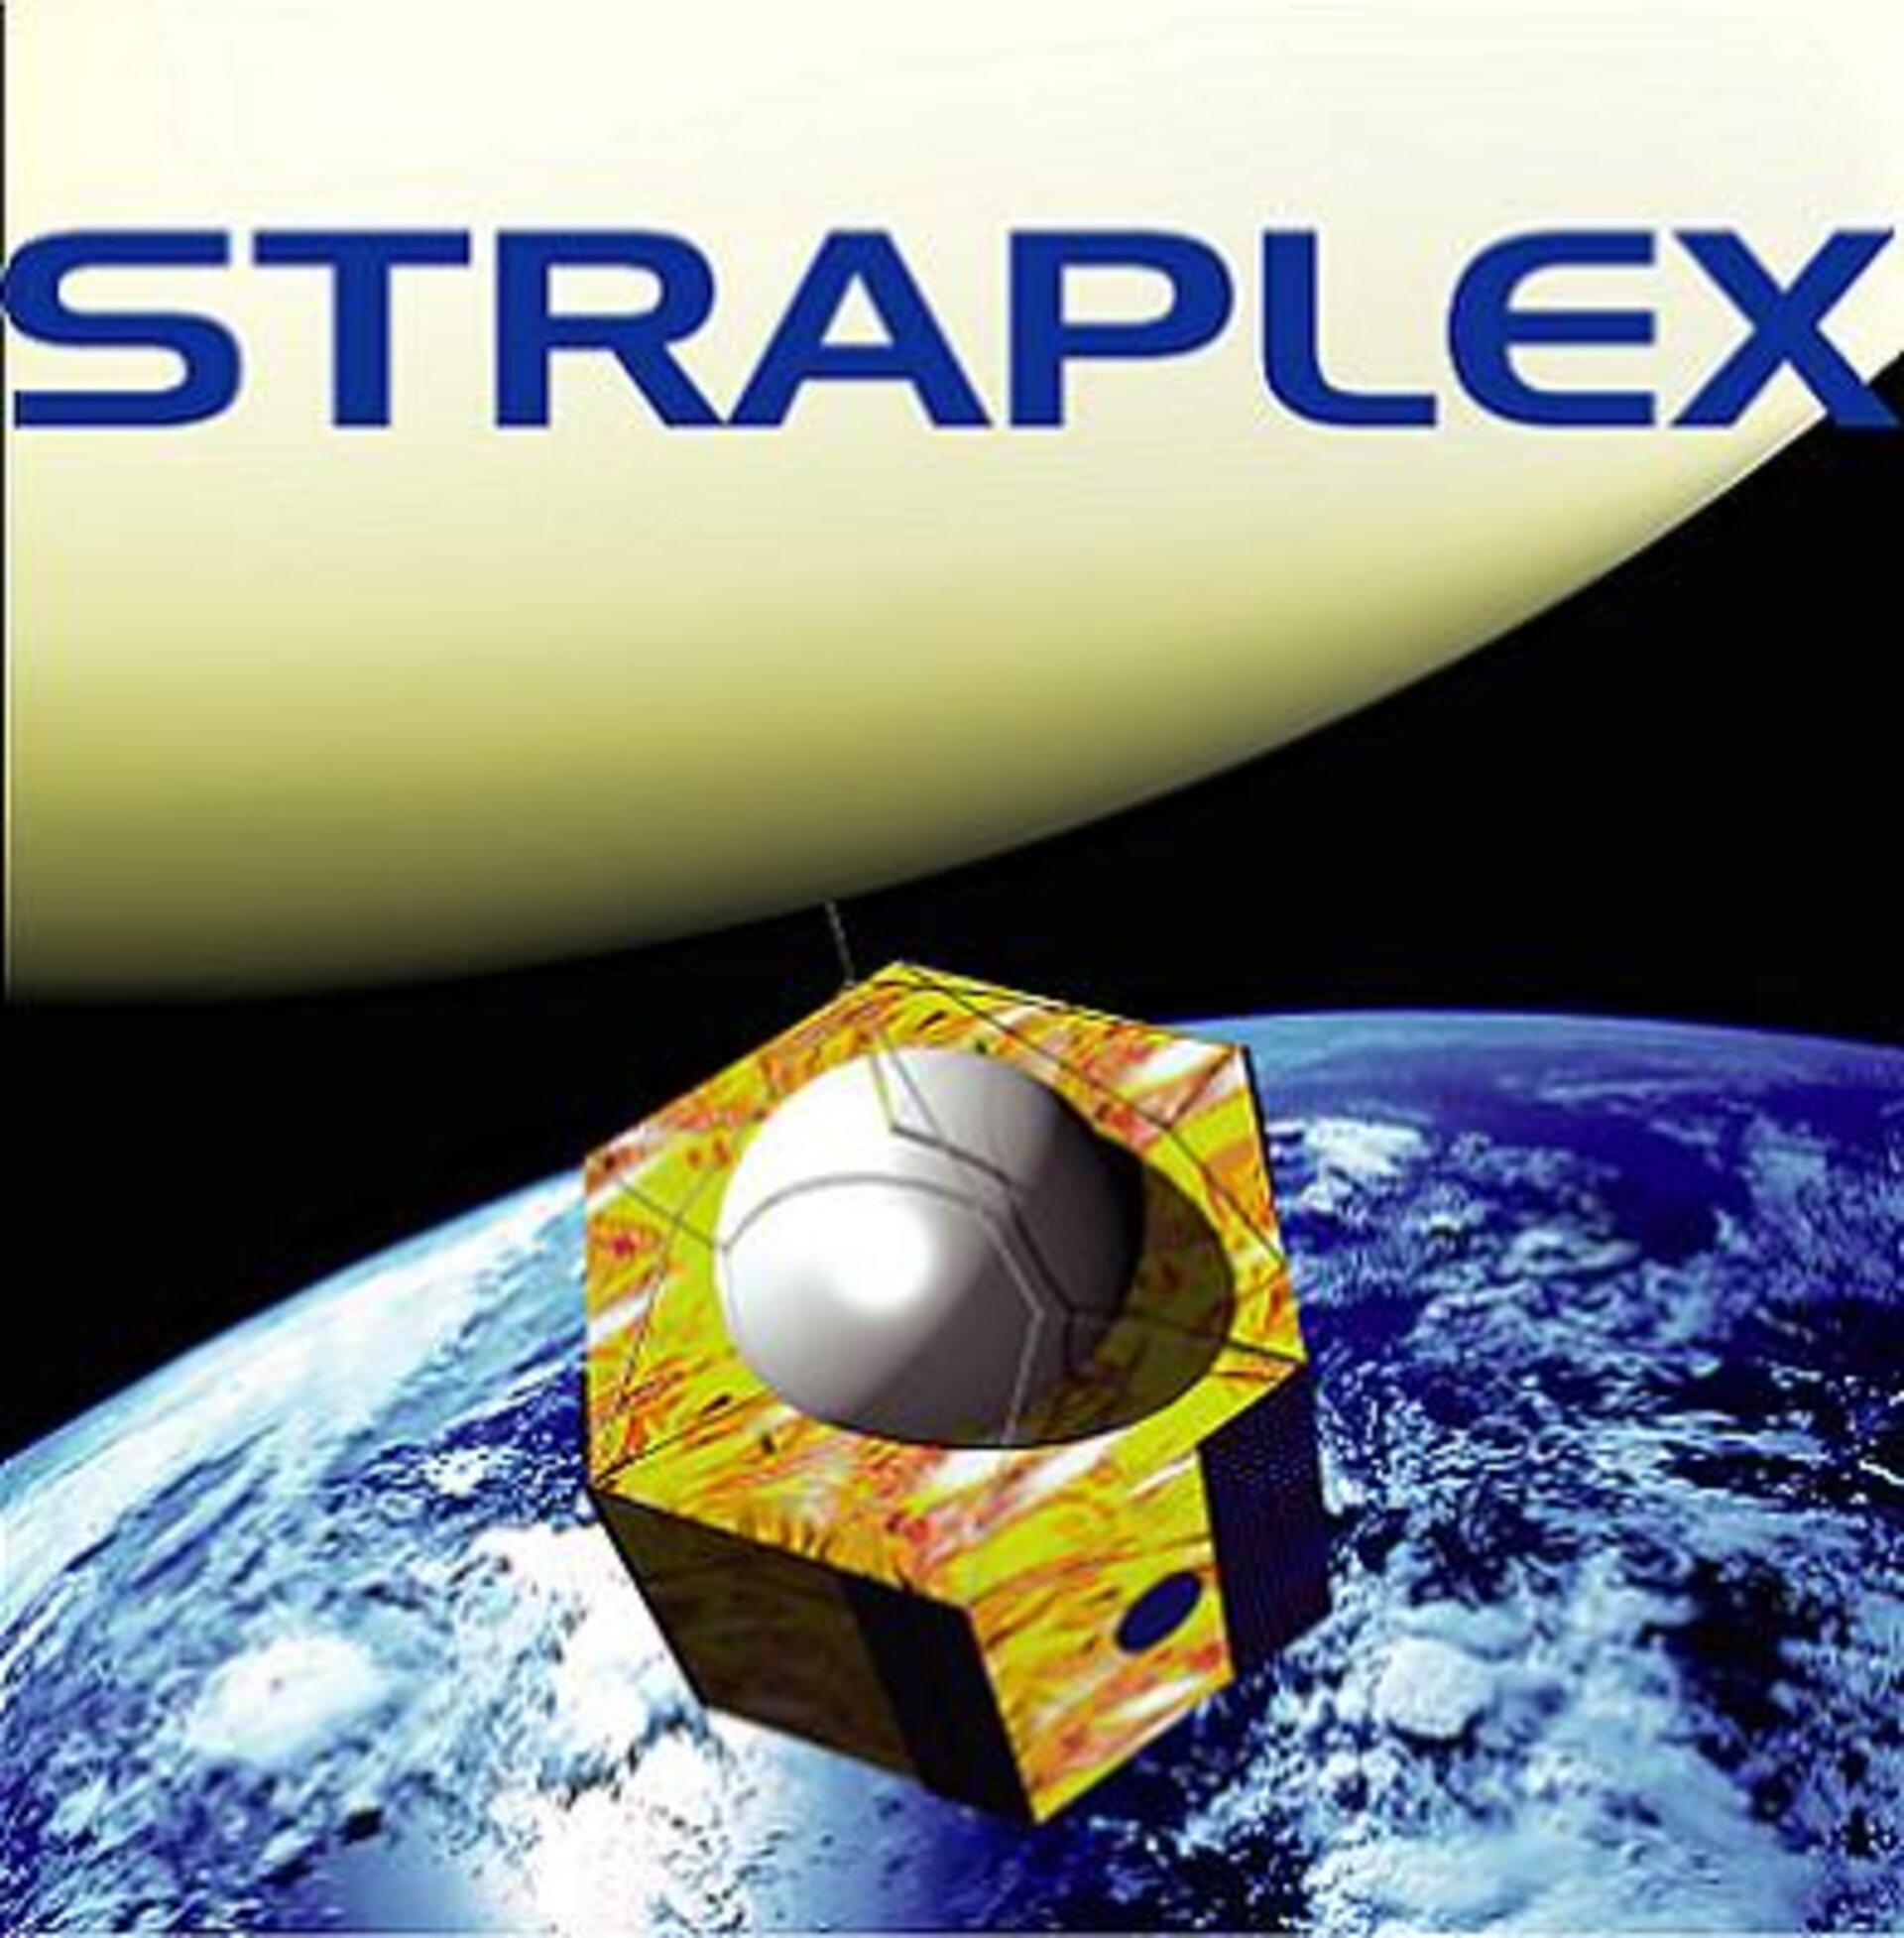 STRAPLEX står för STRAtospheric PLatform EXperiment